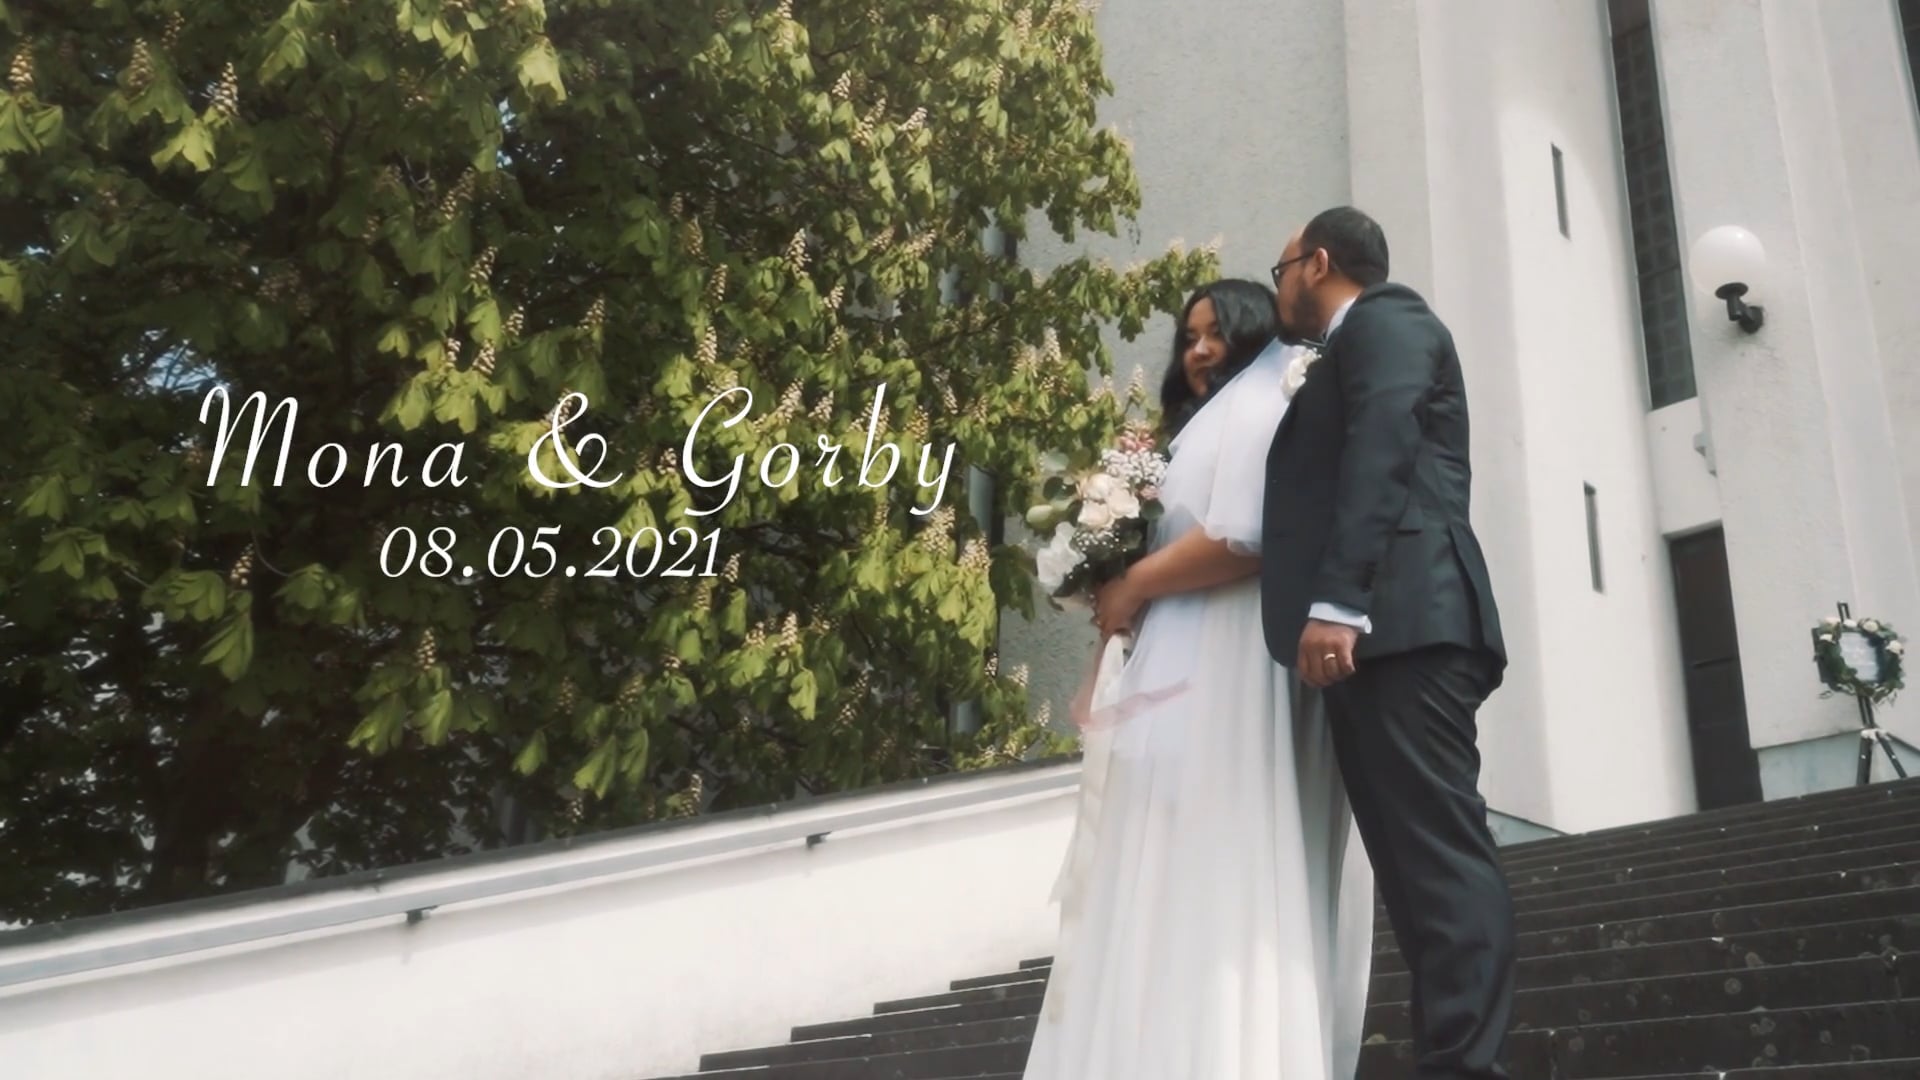 Mona + Gorby's Wedding Video